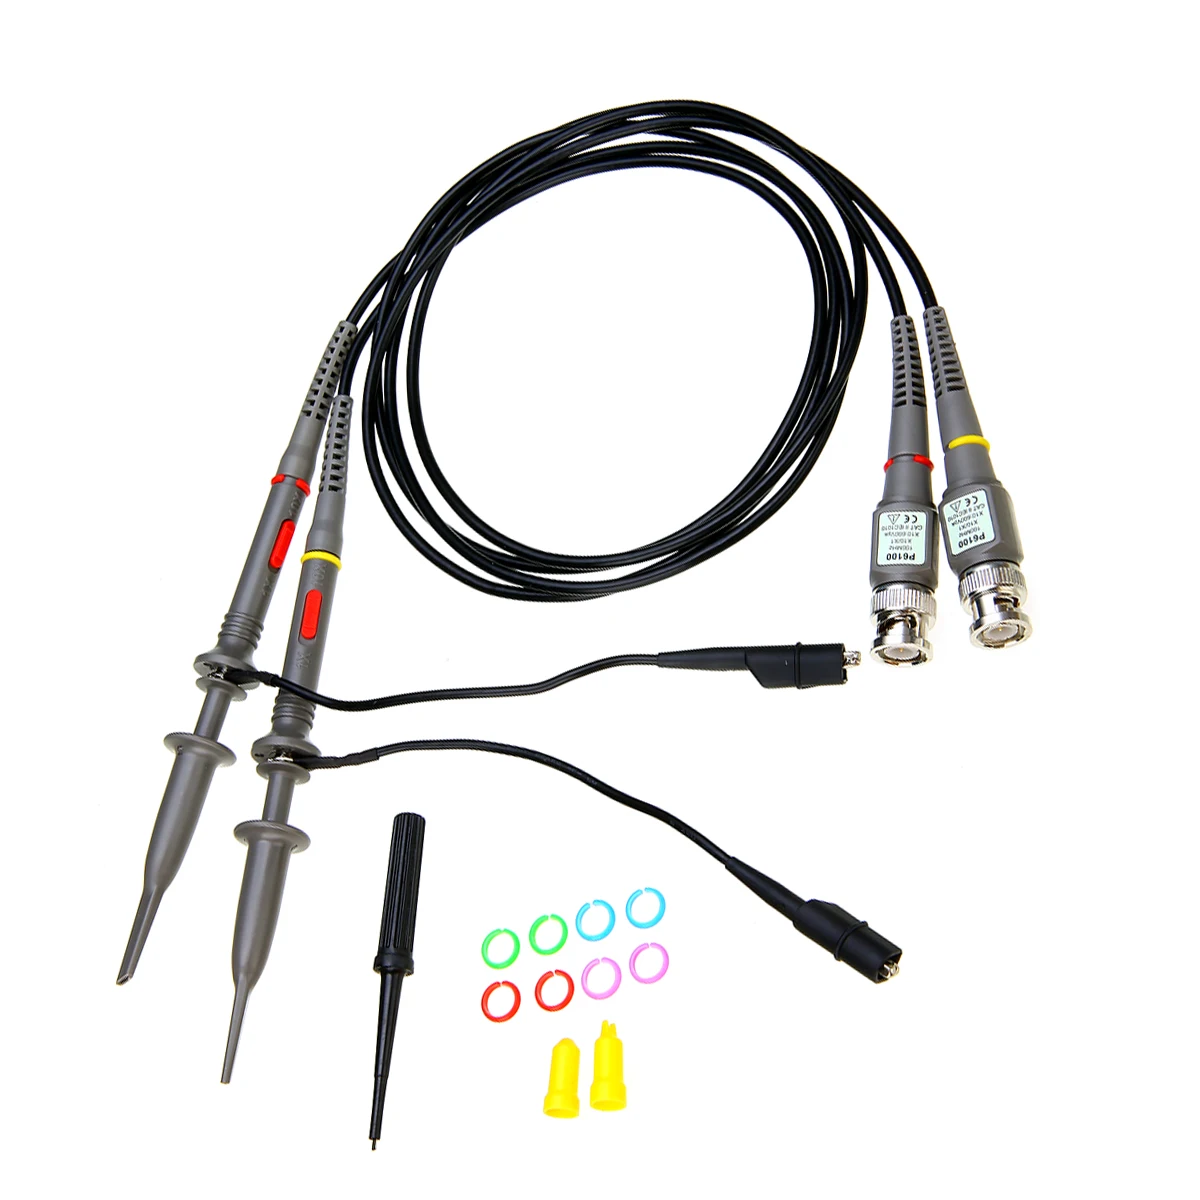 

2Pcs/Set High Quality Oscilloscope Probe 100MHz Oscilloscope Scope Analyzer Clip Probe Test Leads Measure Accessories